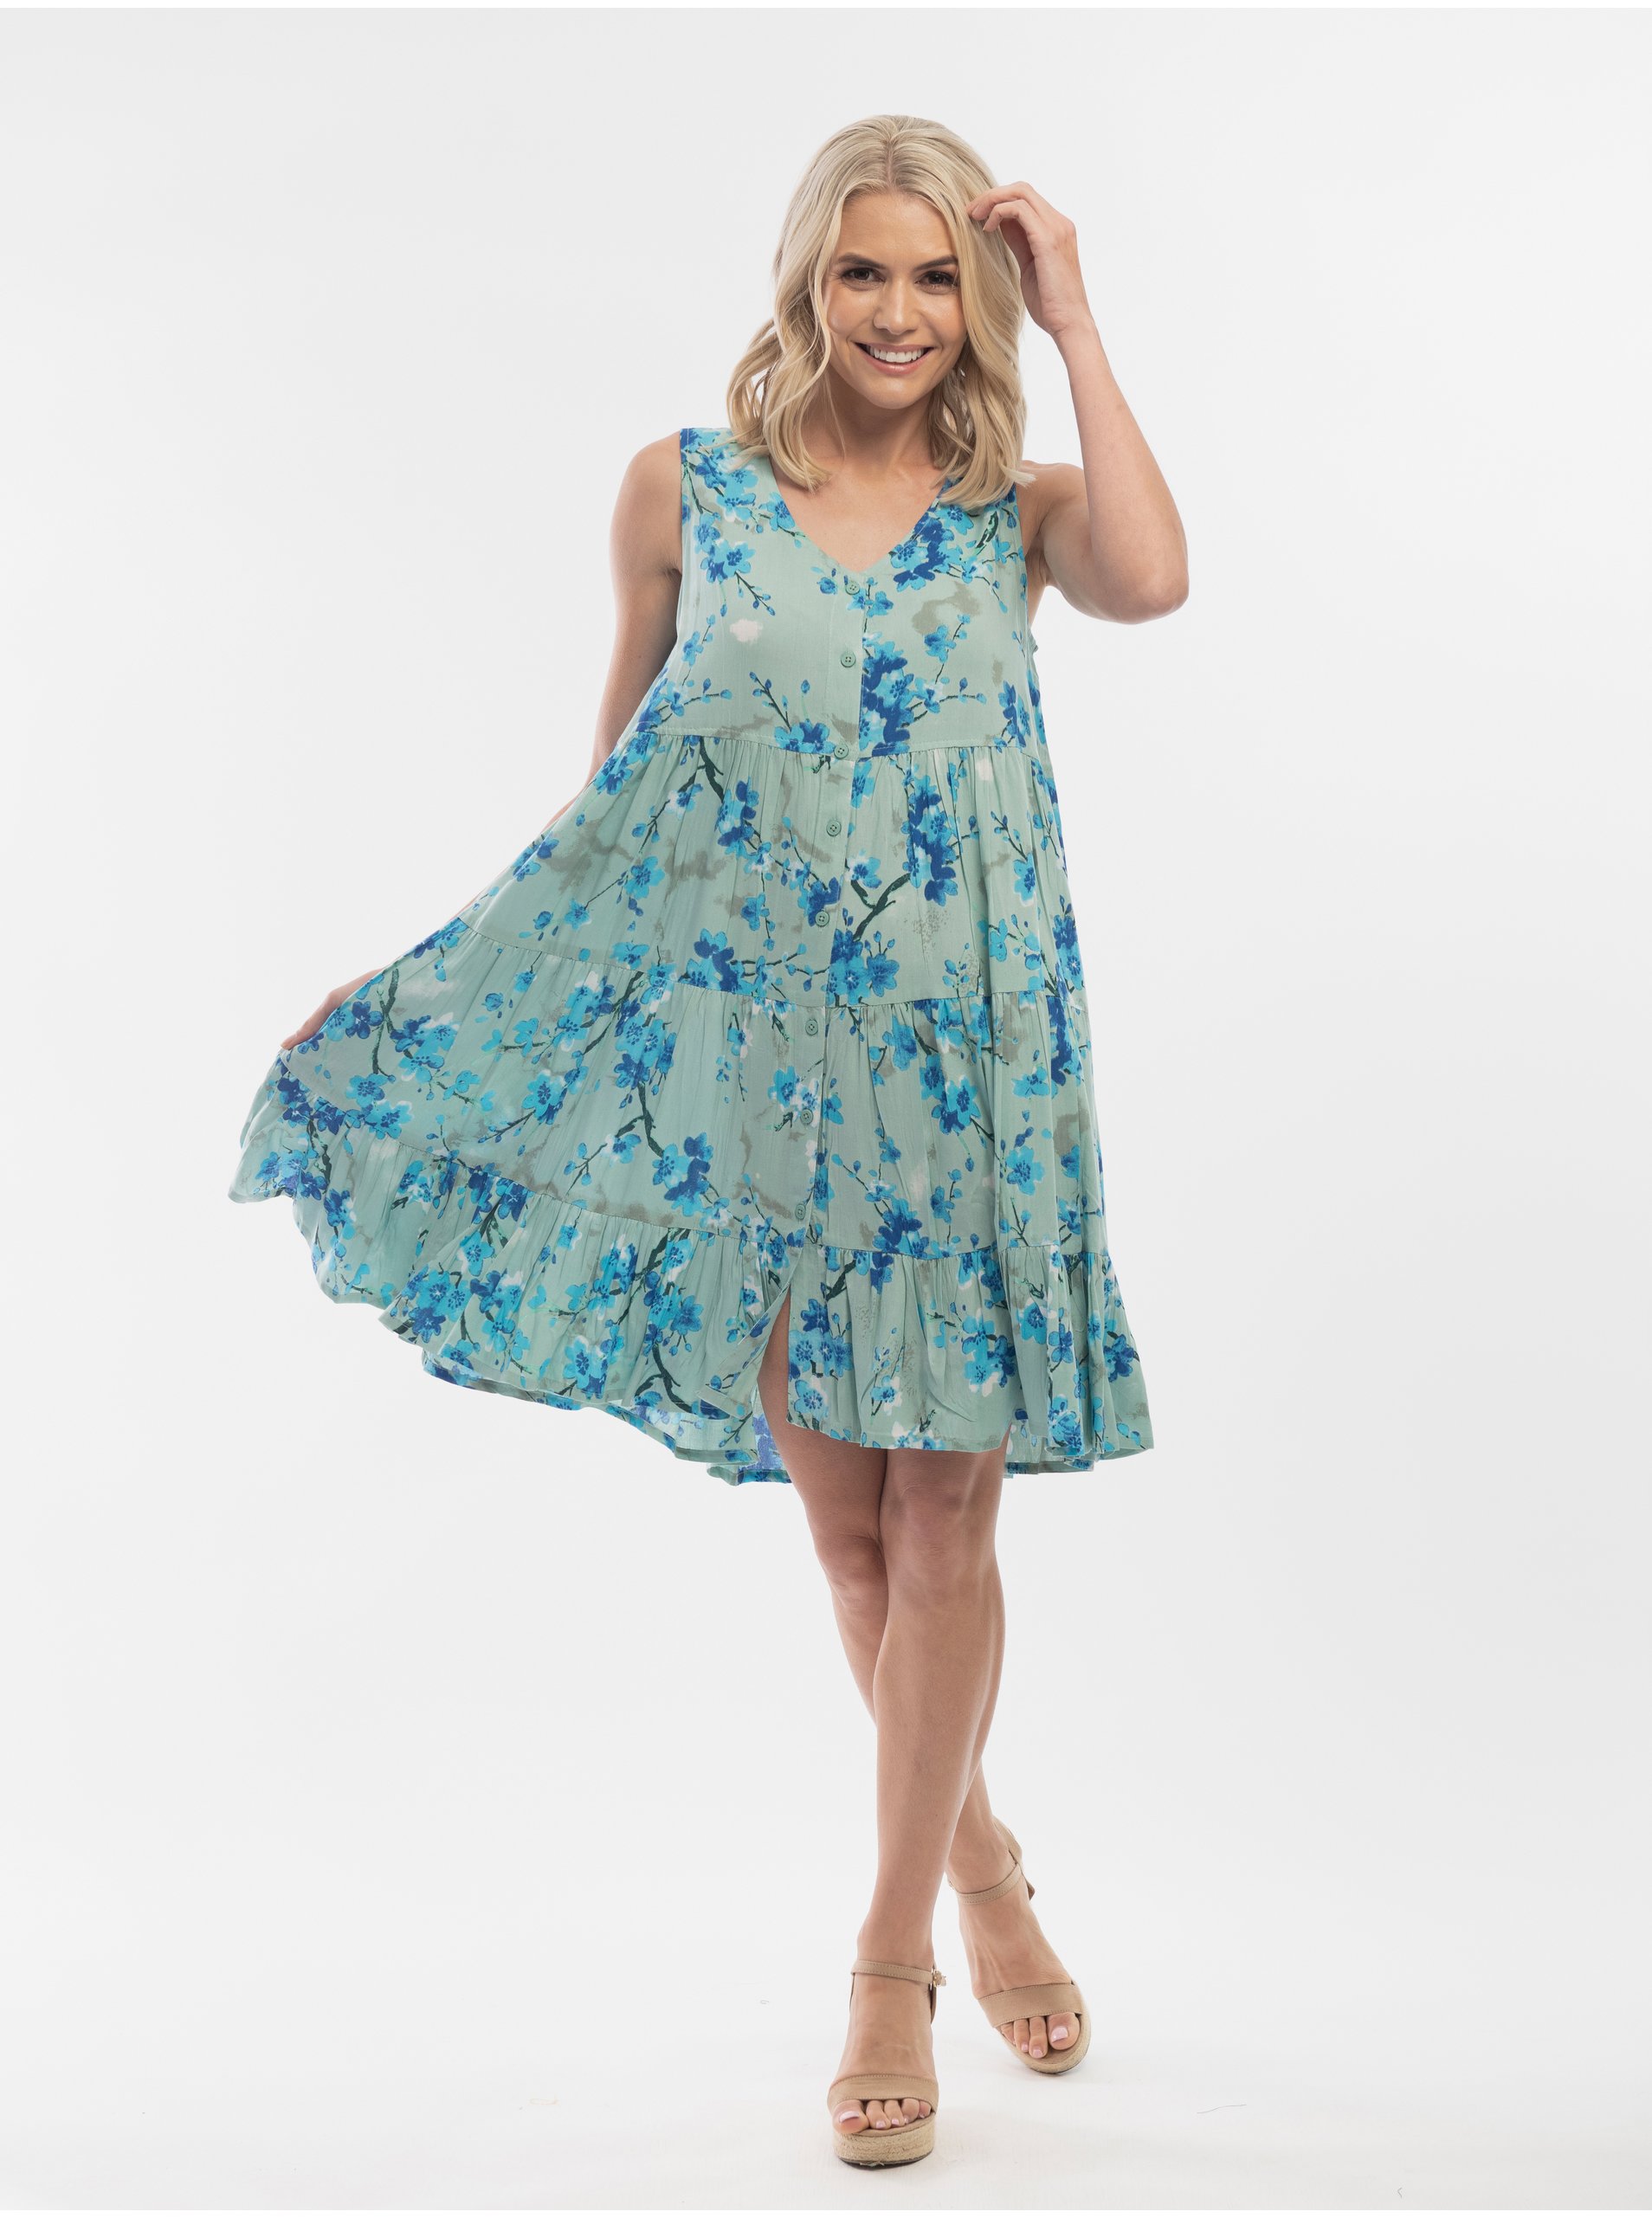 E-shop Letné a plážové šaty pre ženy Orientique - tyrkysová, modrá